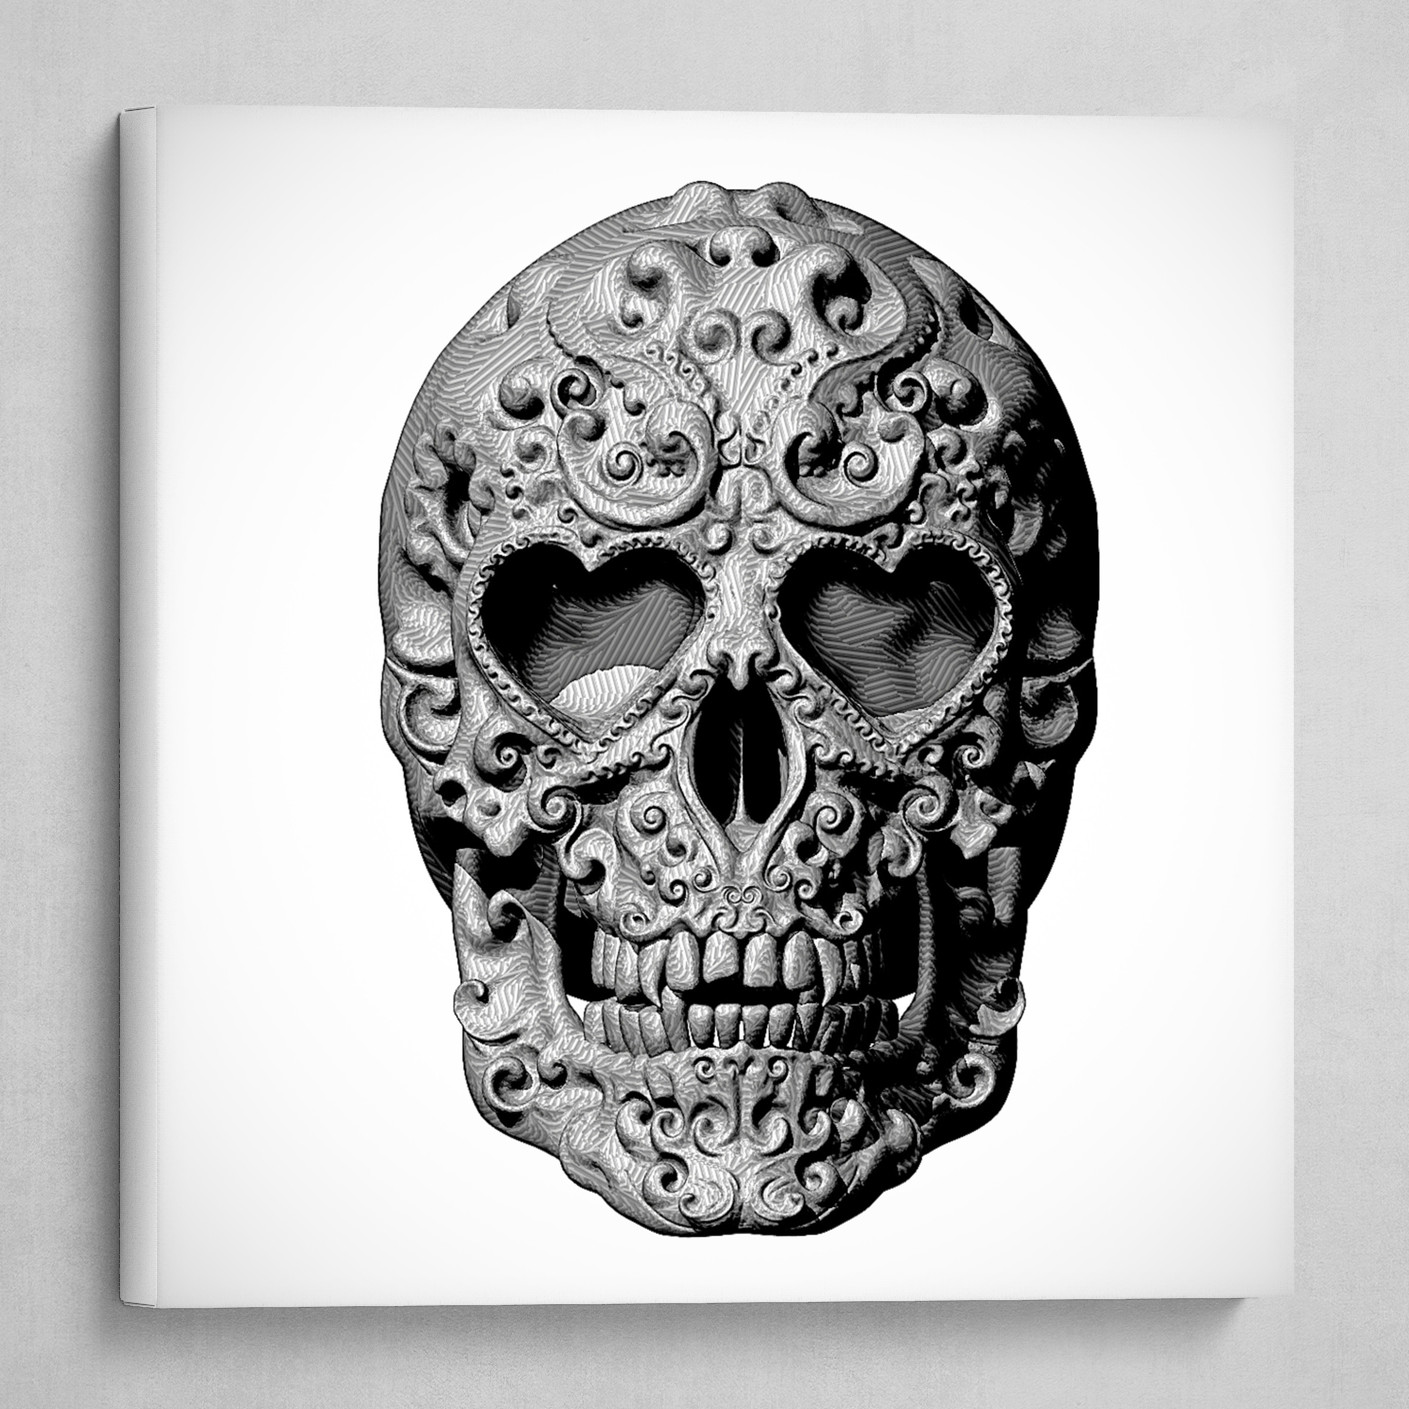 Mexican Skull Calavera Day of the dead themed - no signature